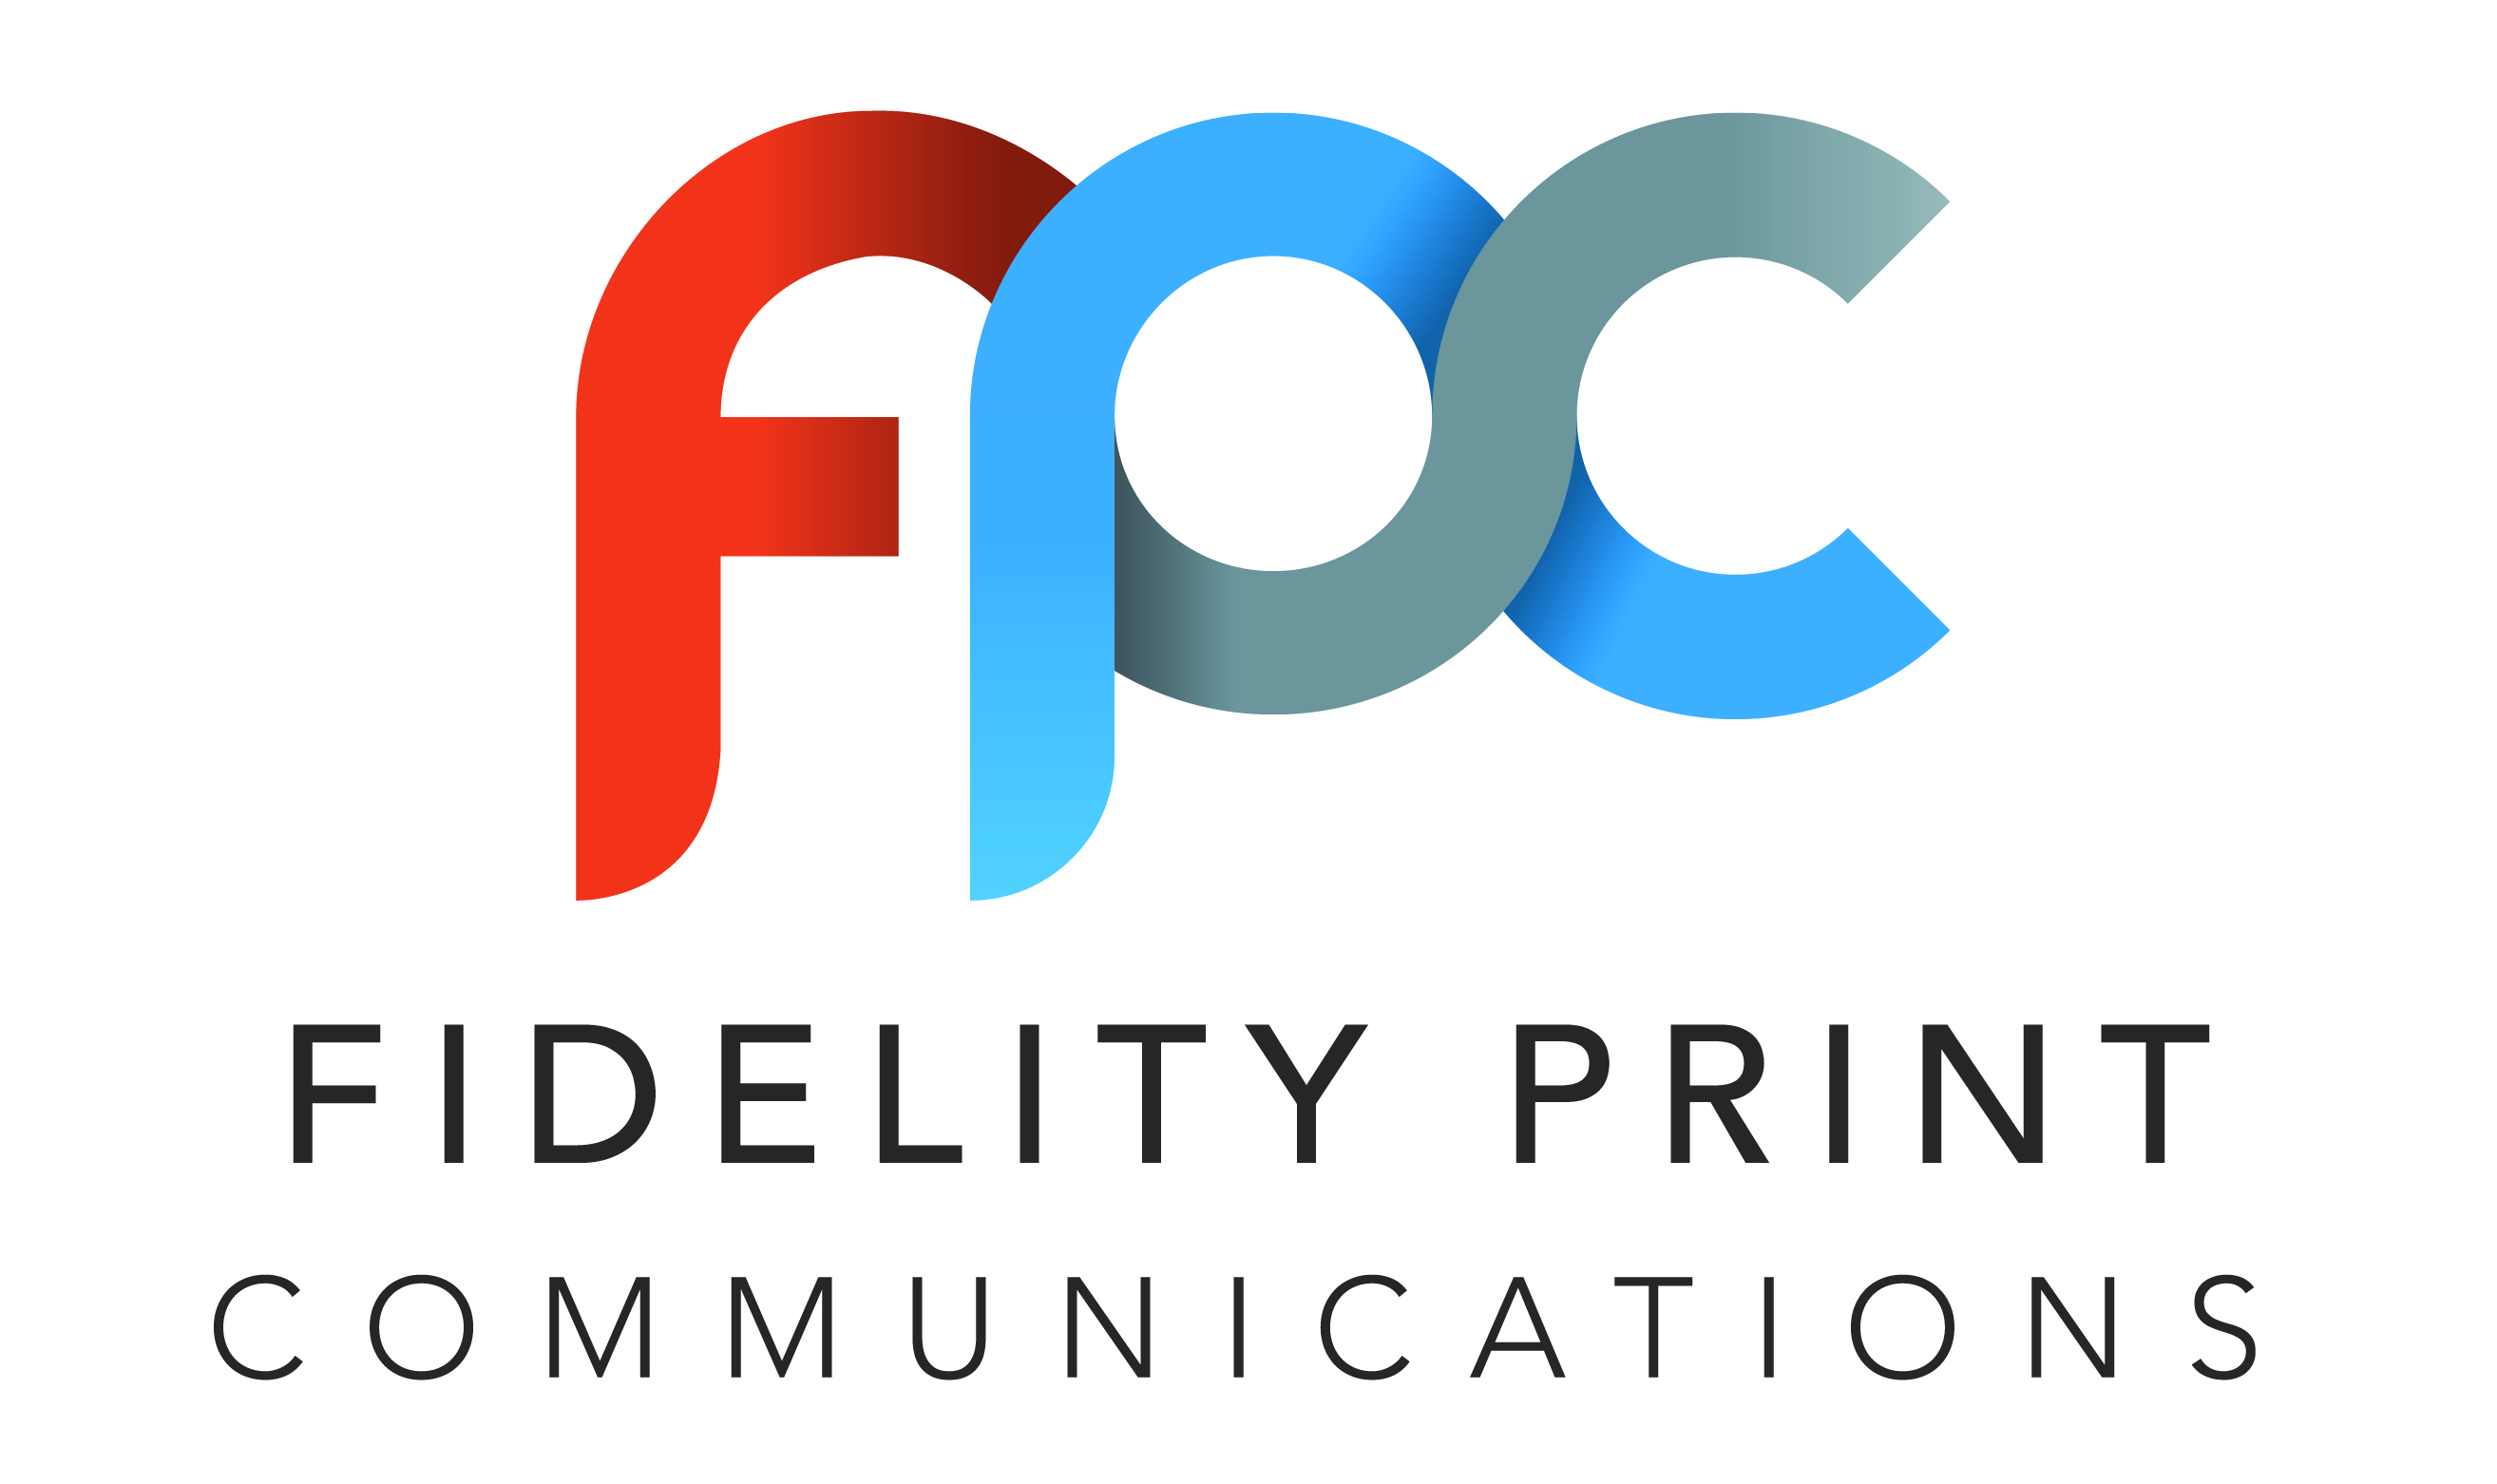 Fidelity Print Communications